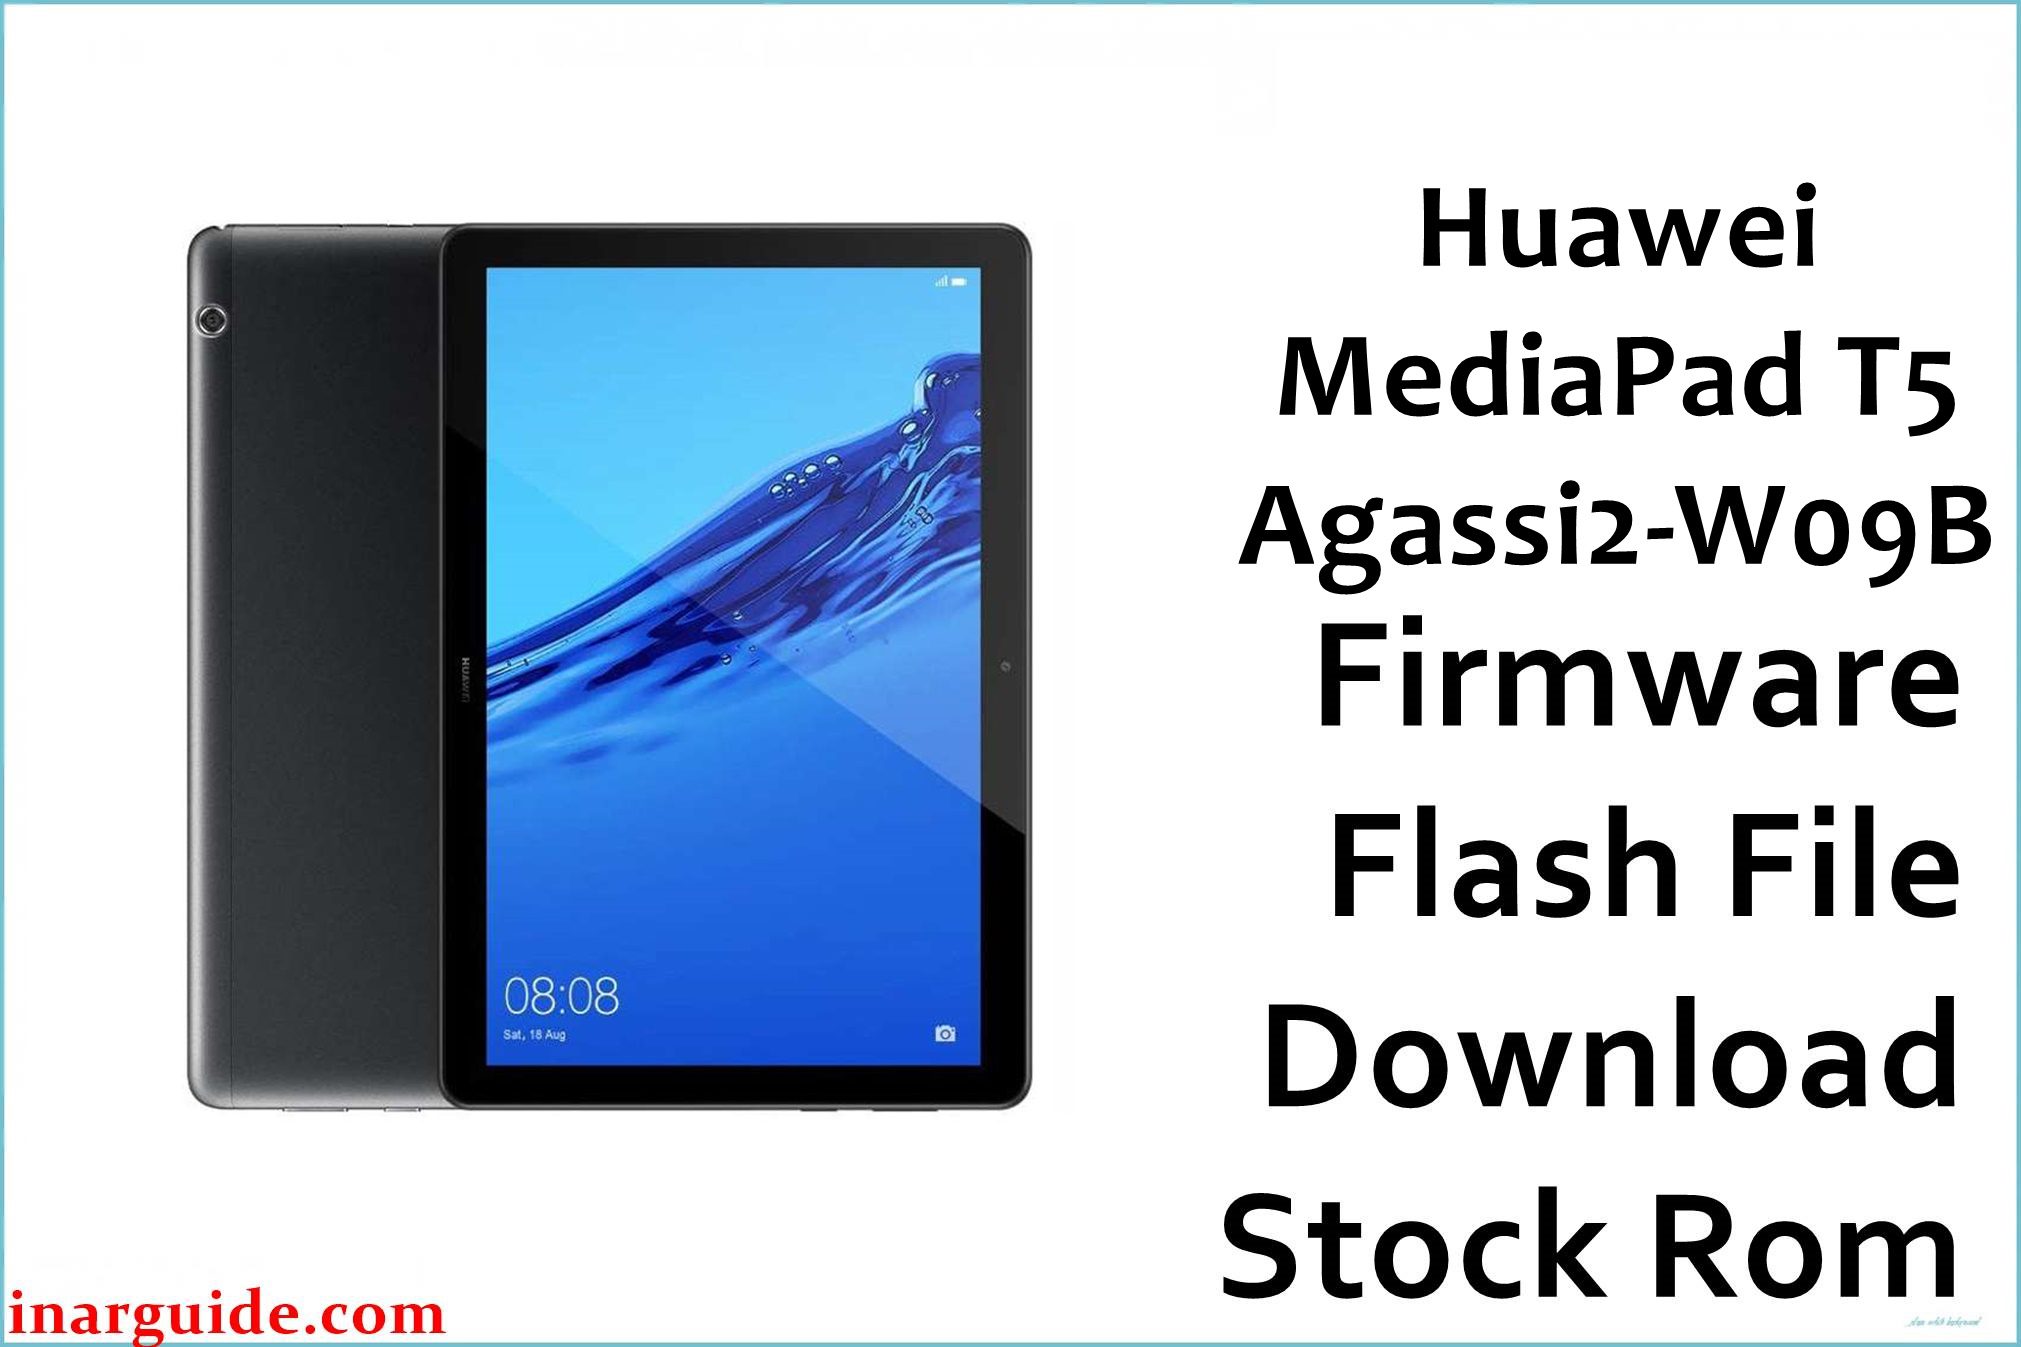 Huawei MediaPad T5 Agassi2 W09B